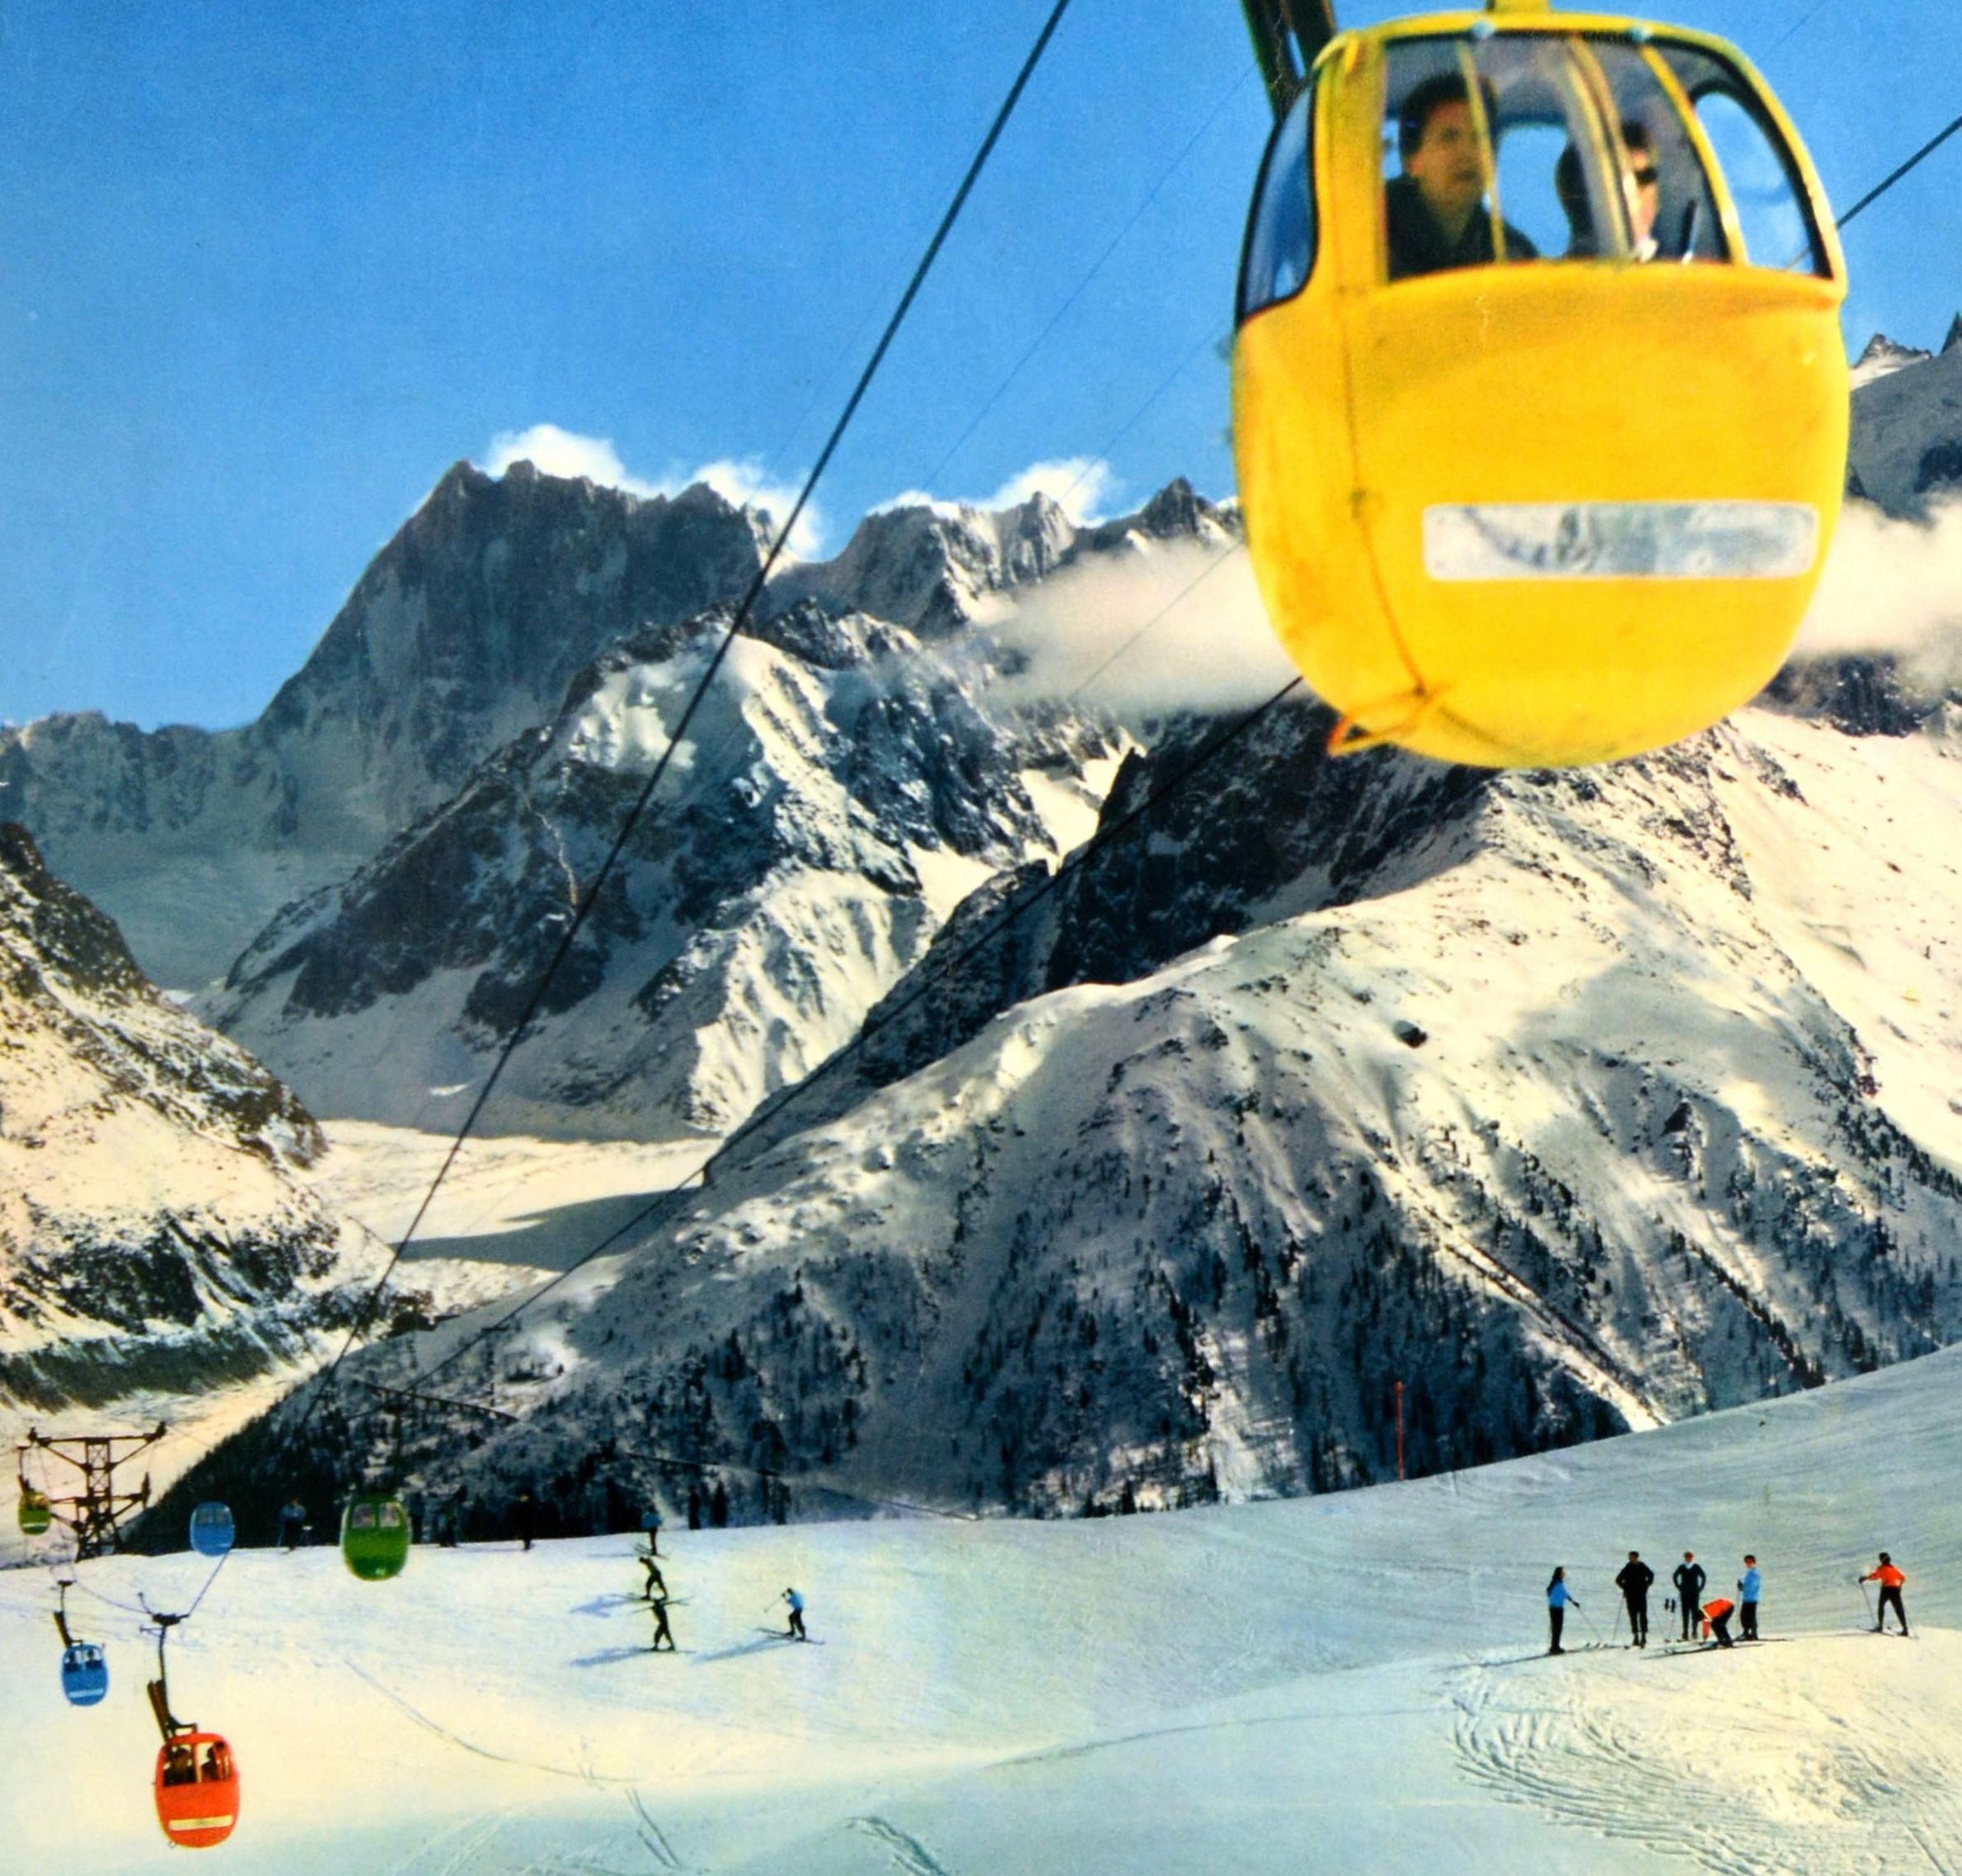 French Original Vintage Ski Poster Chamonix Mont Blanc France Winter Sports d'Hiver